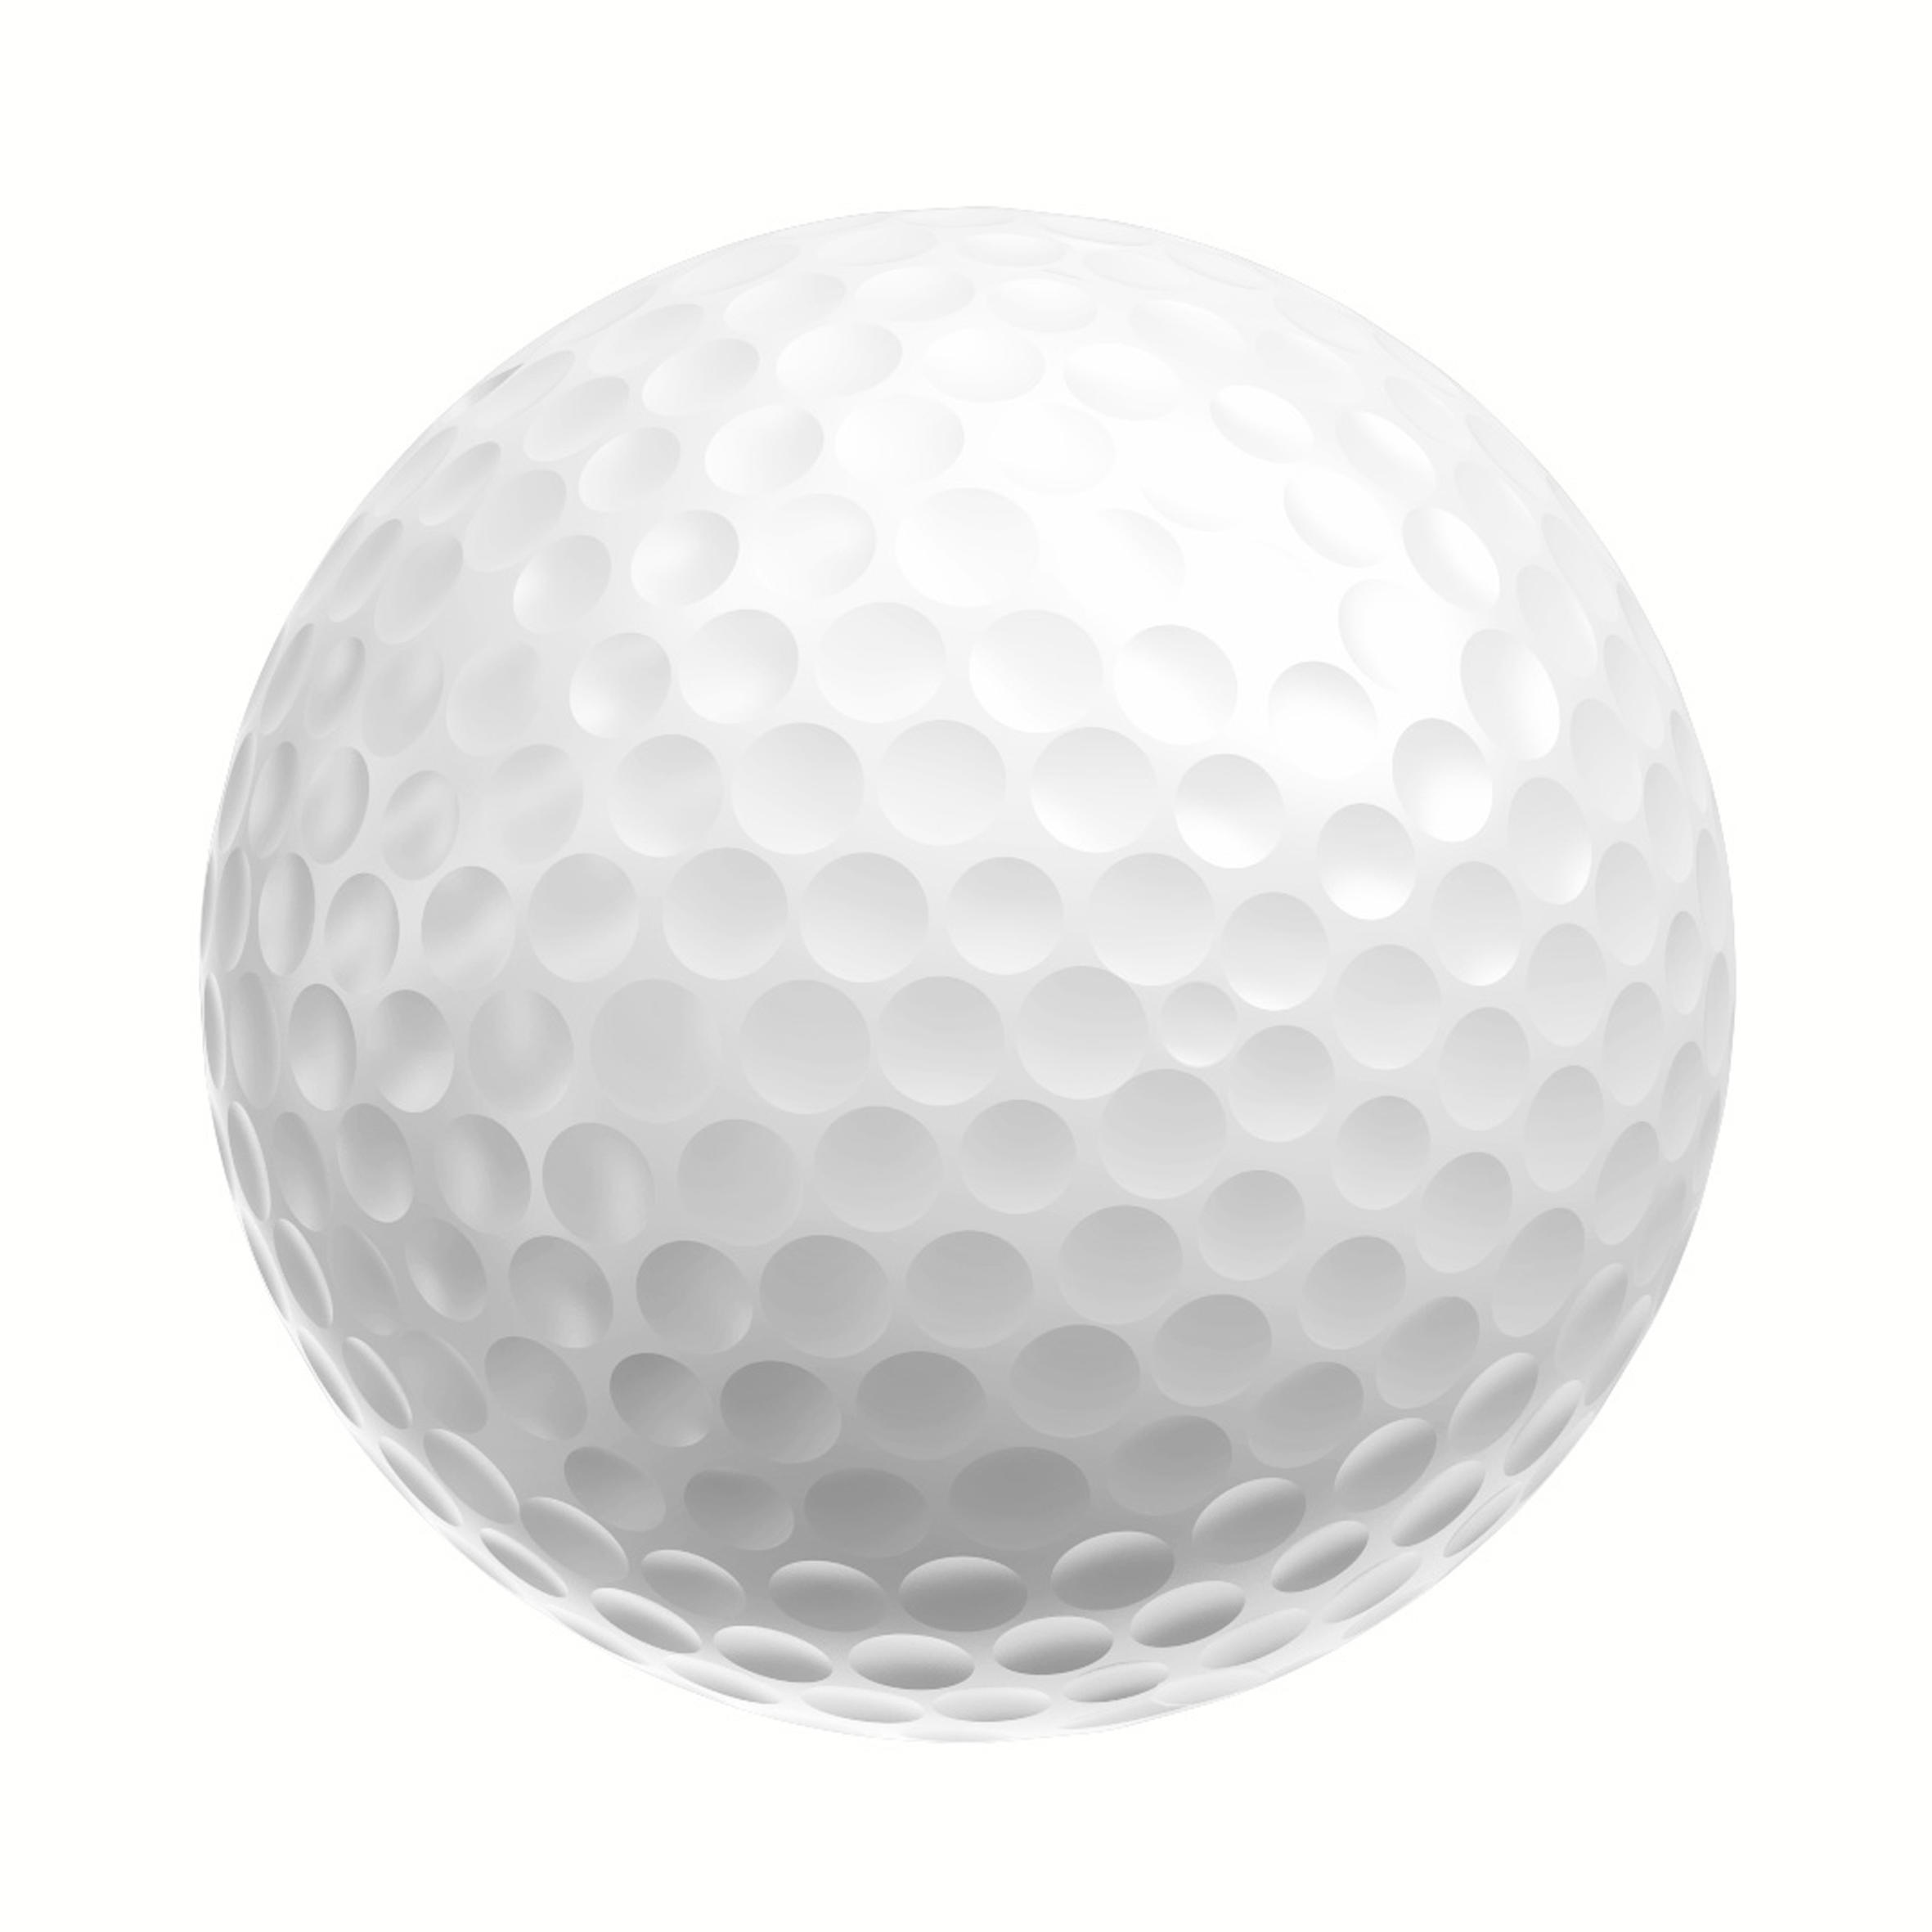 inesis distance 100 golf ball